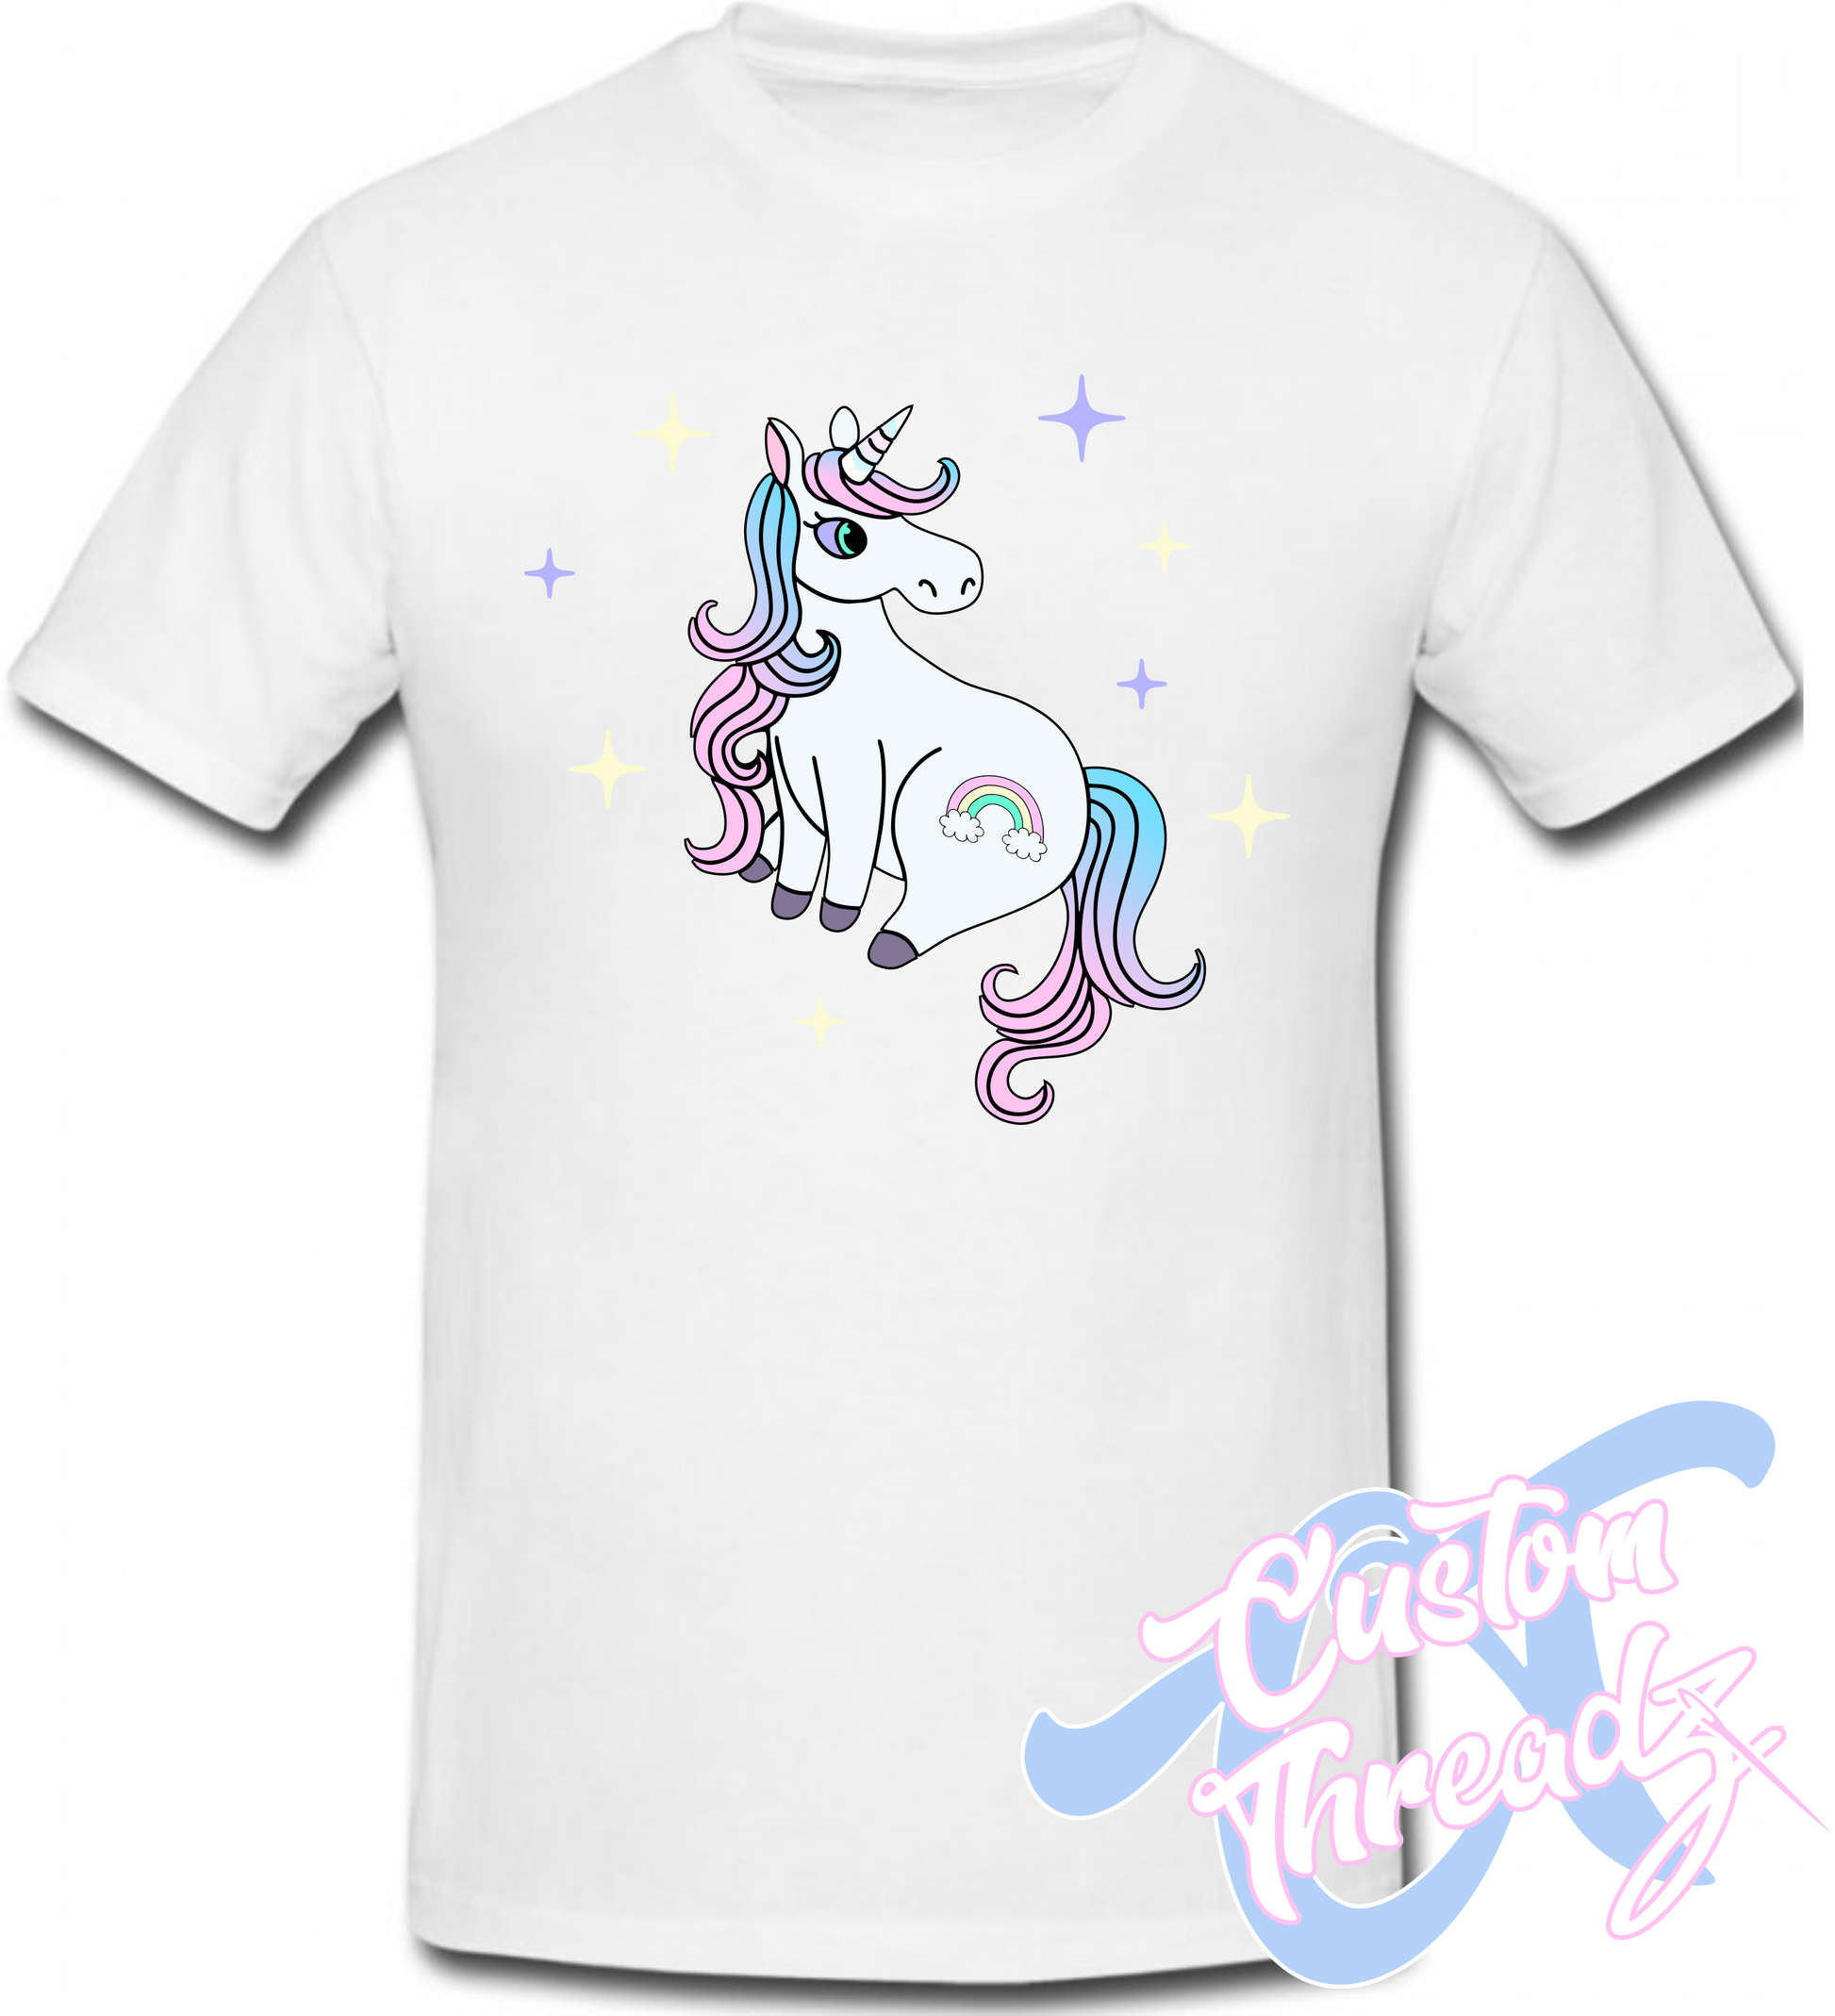 white tee with cute rainbow unicorn DTG printed design